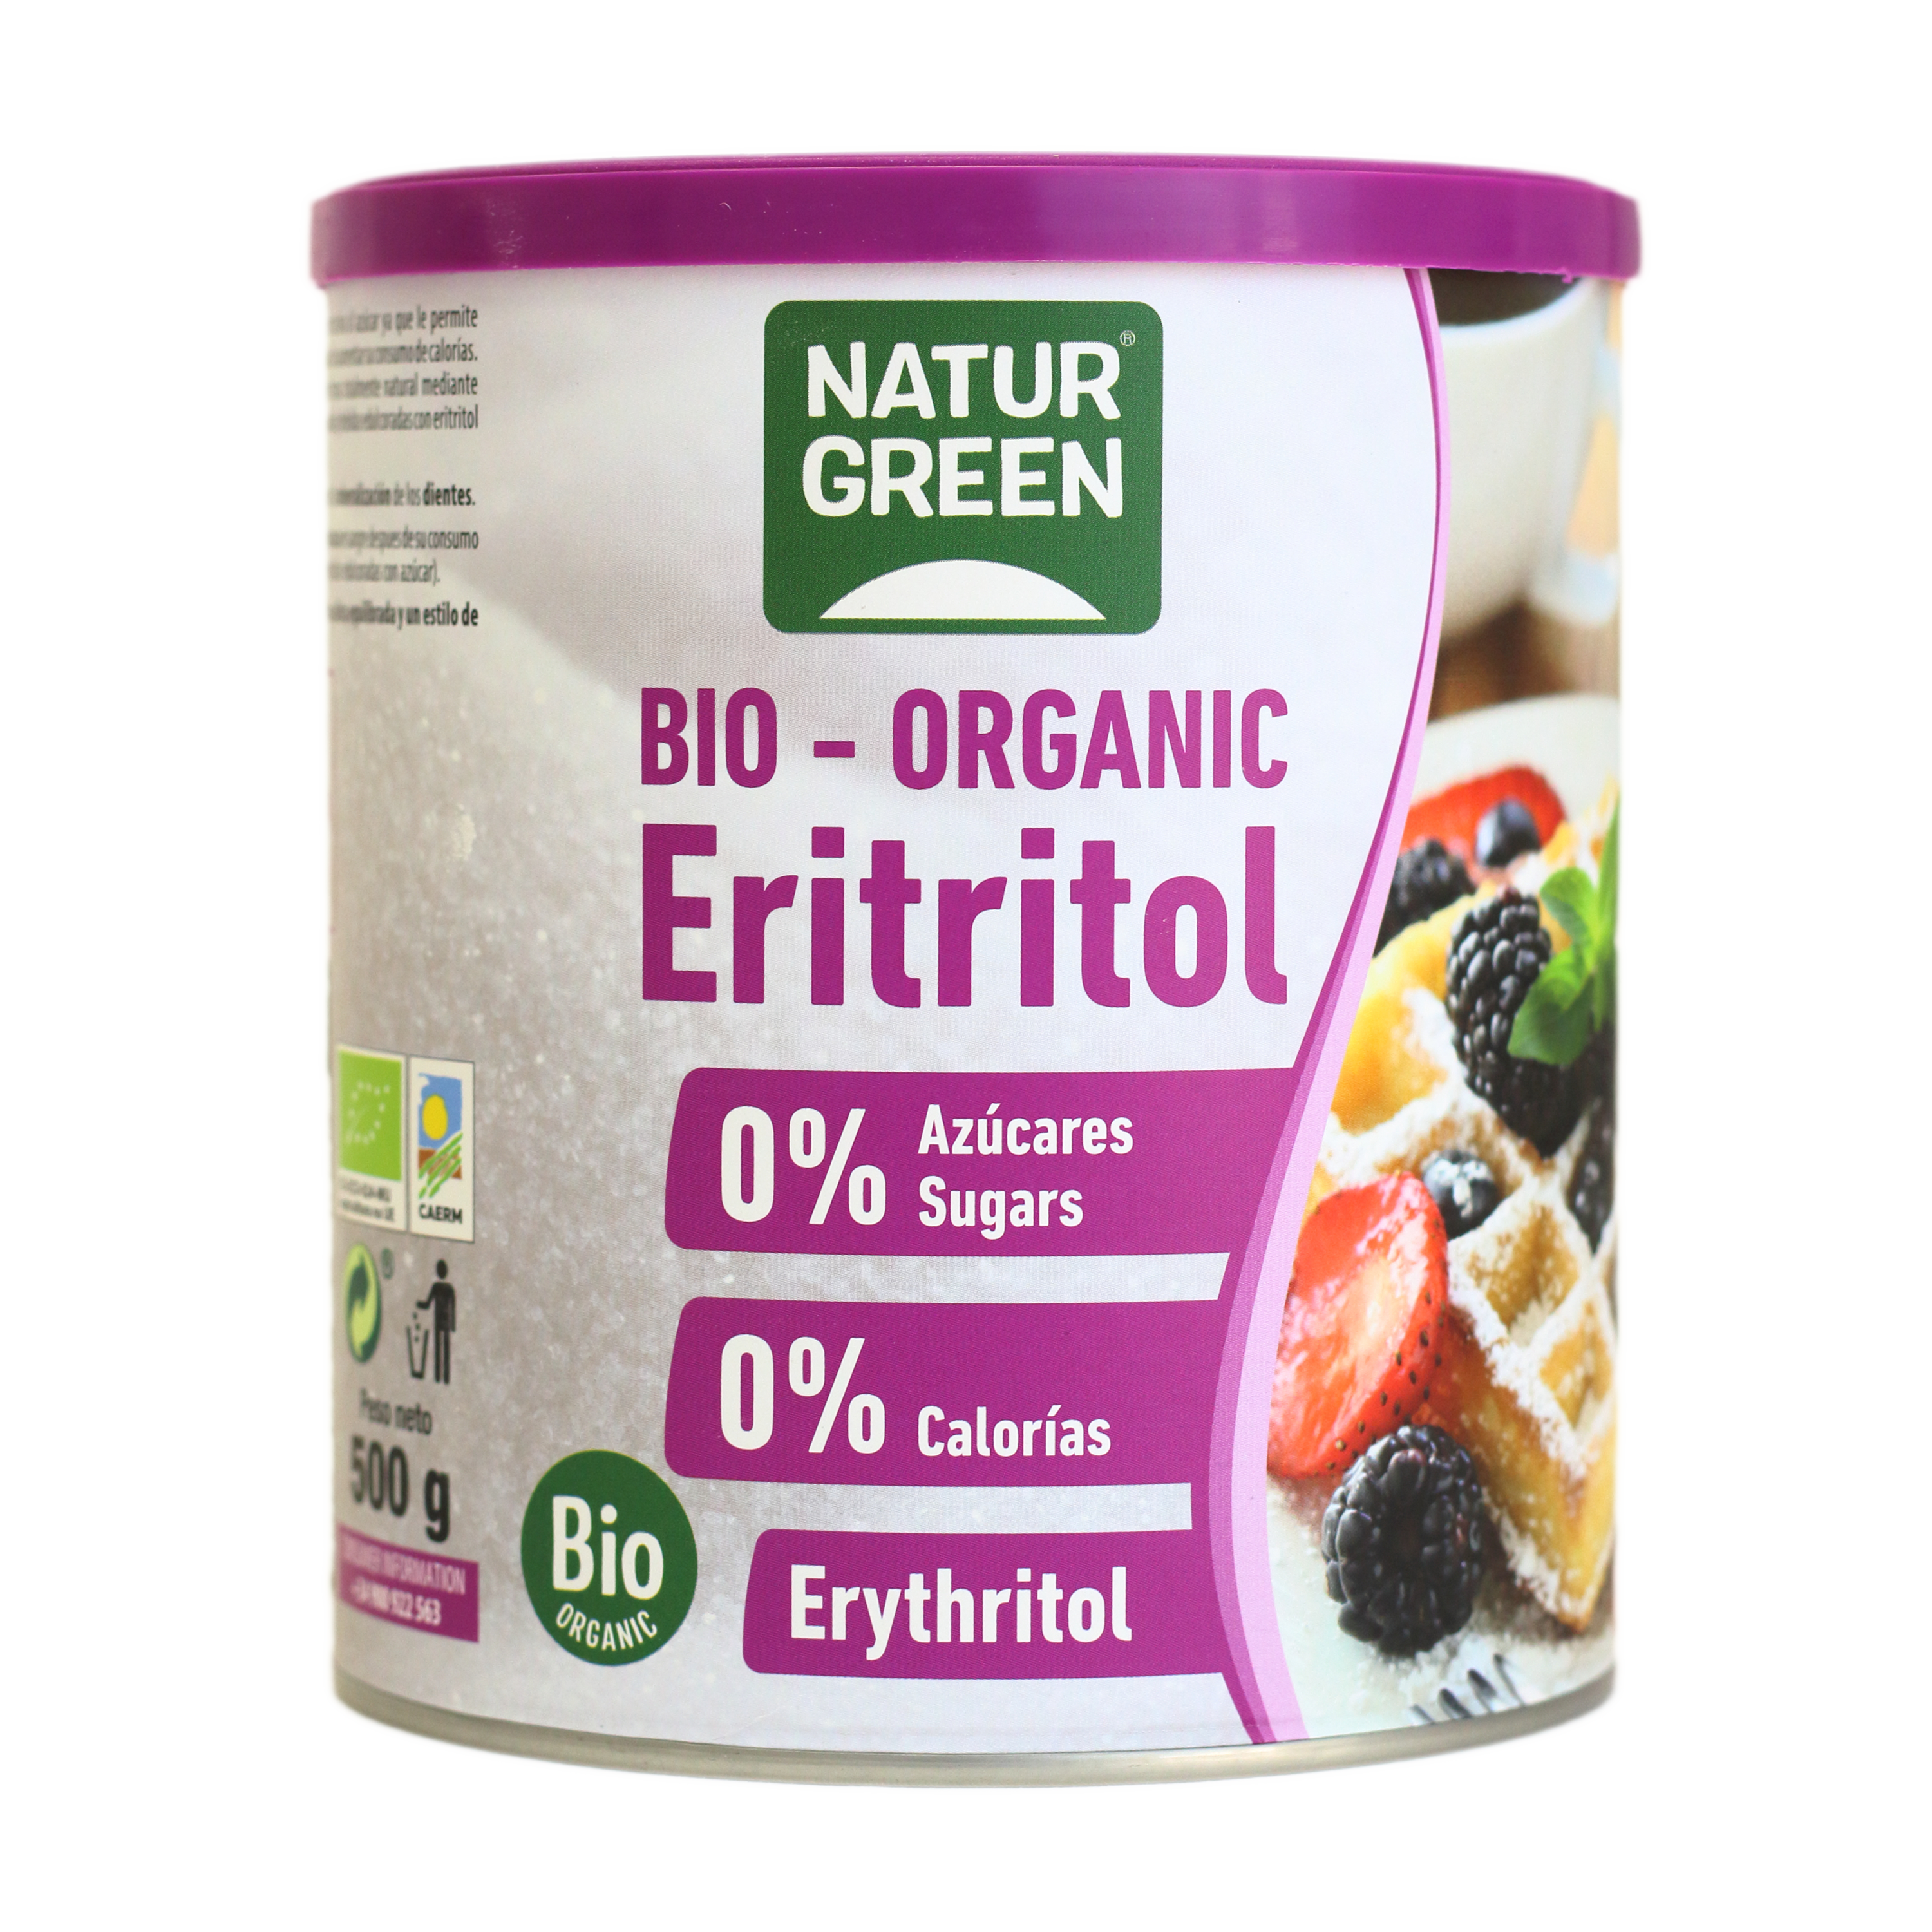 NaturGreen Eritritol BIO-Organic, 500 g. Dieta saludable.